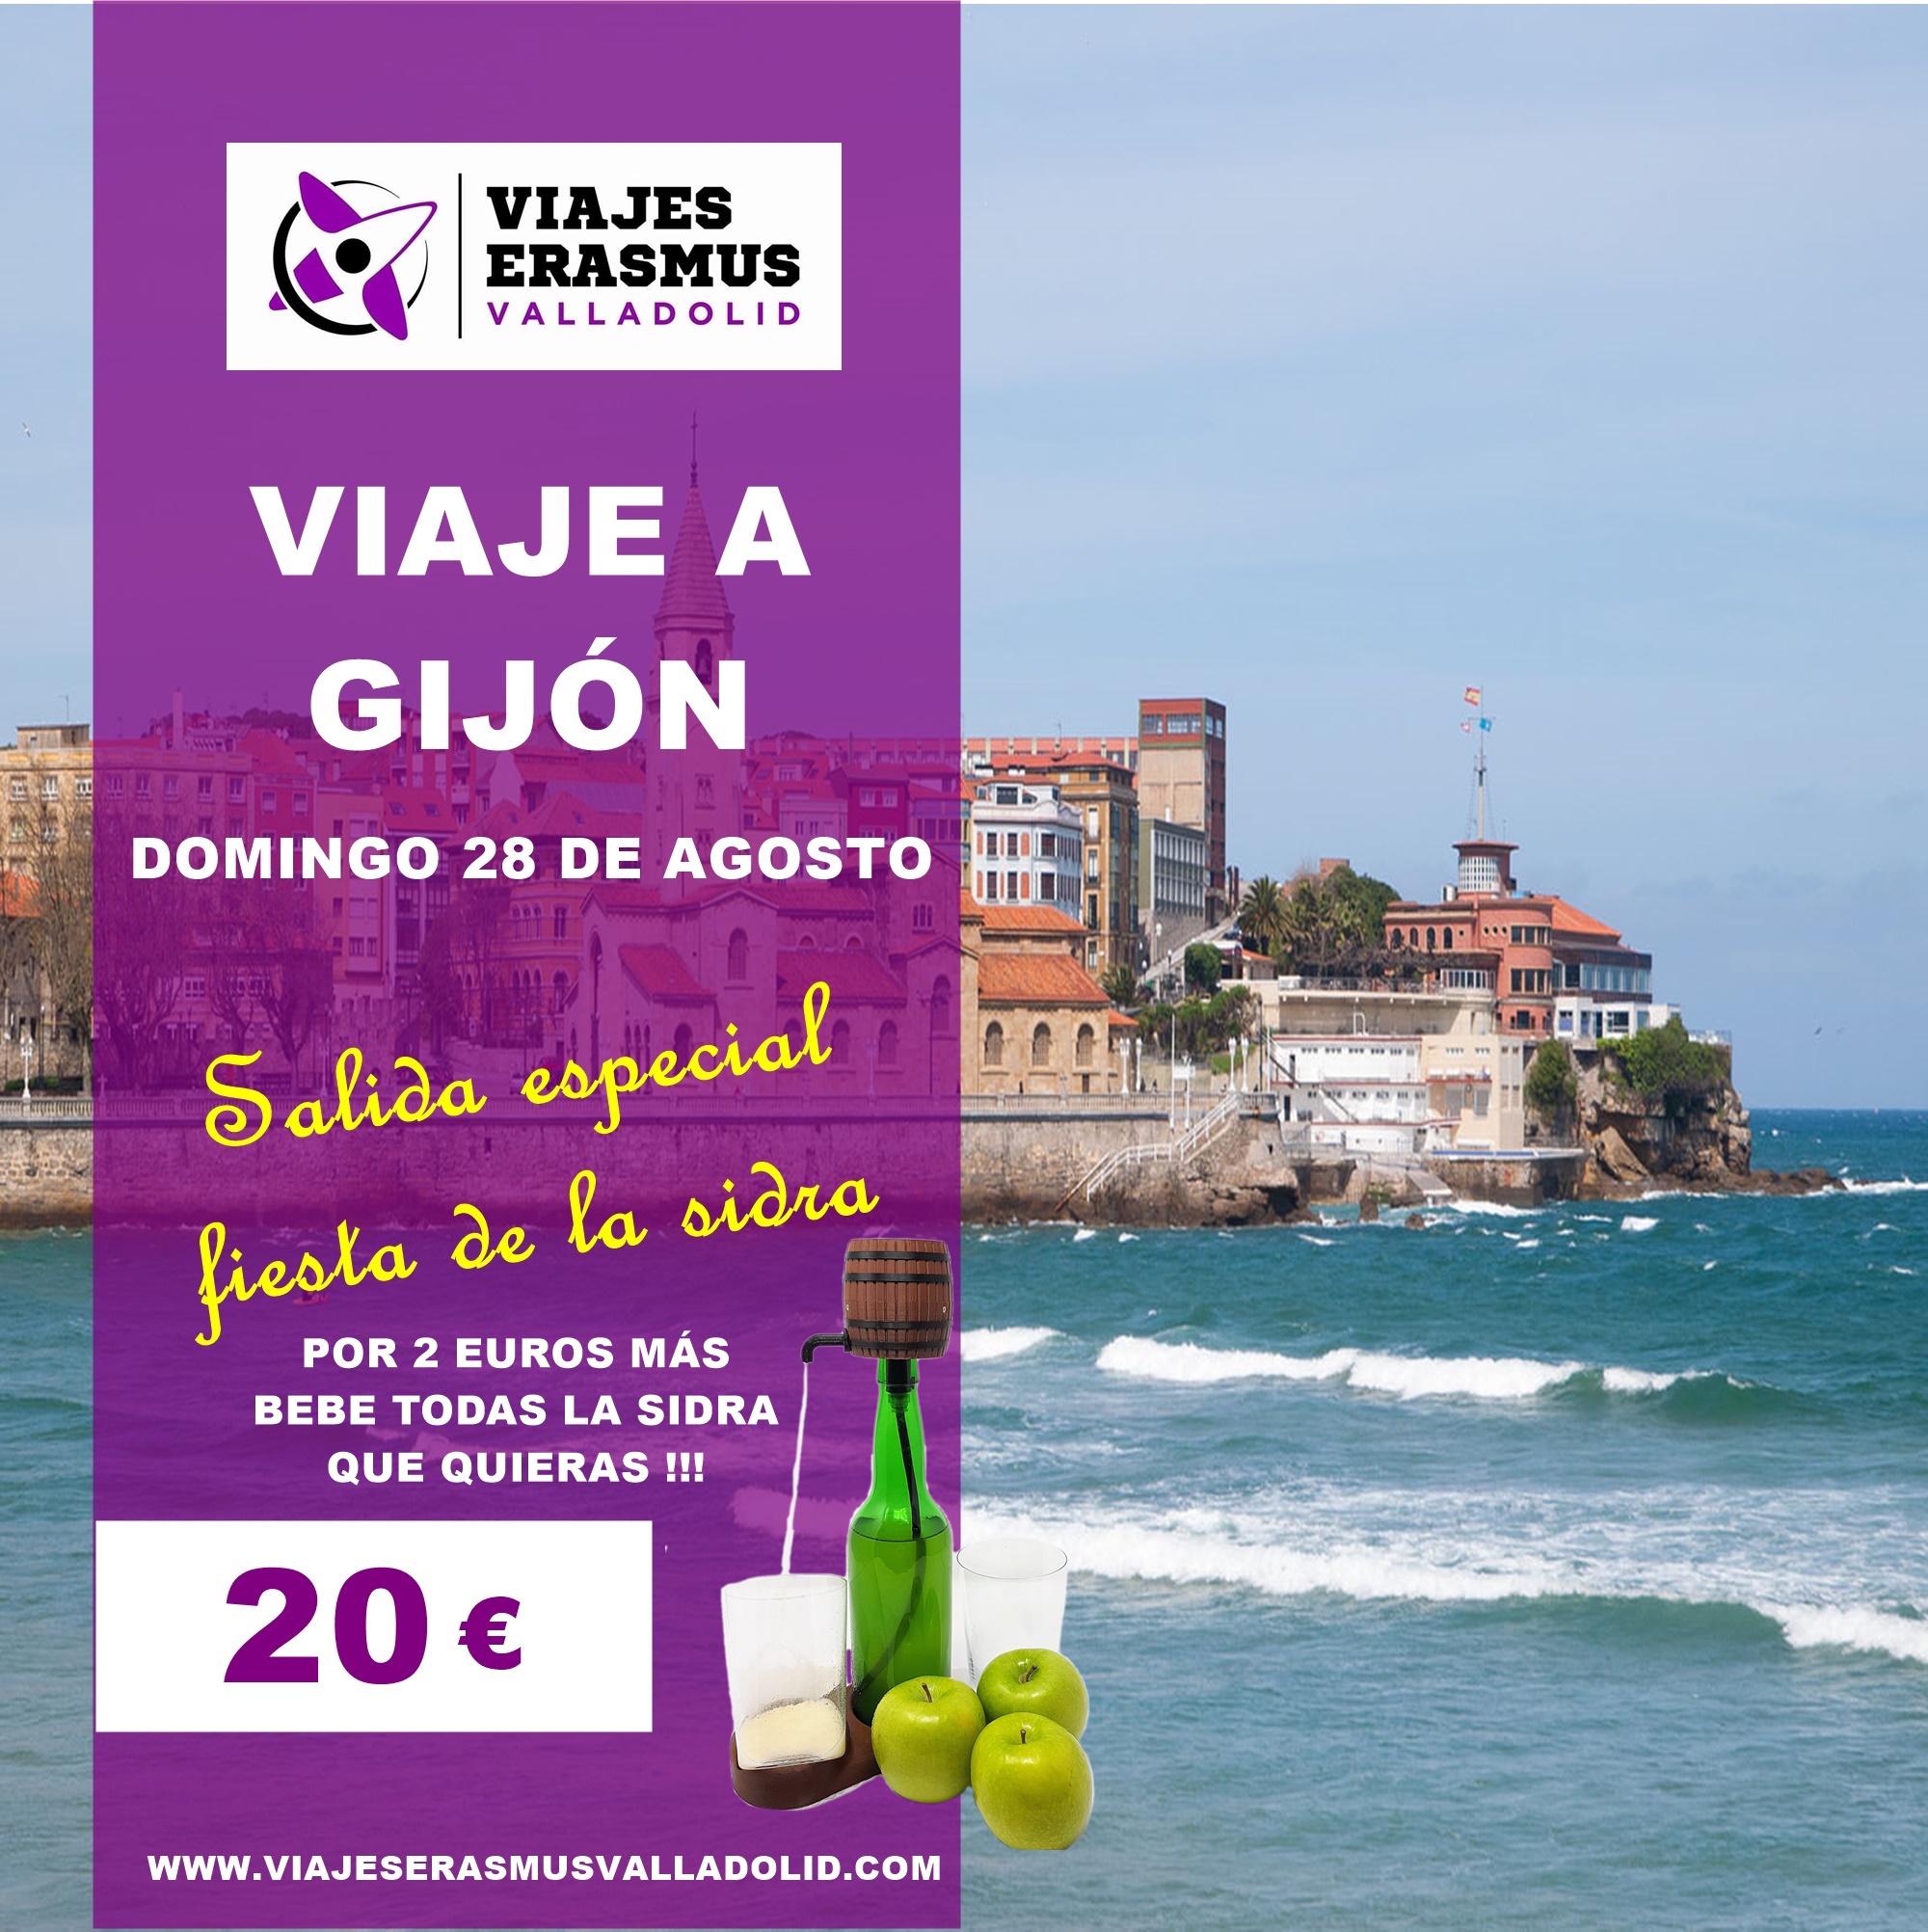 Viaje a Gijón fiesta de la sidra